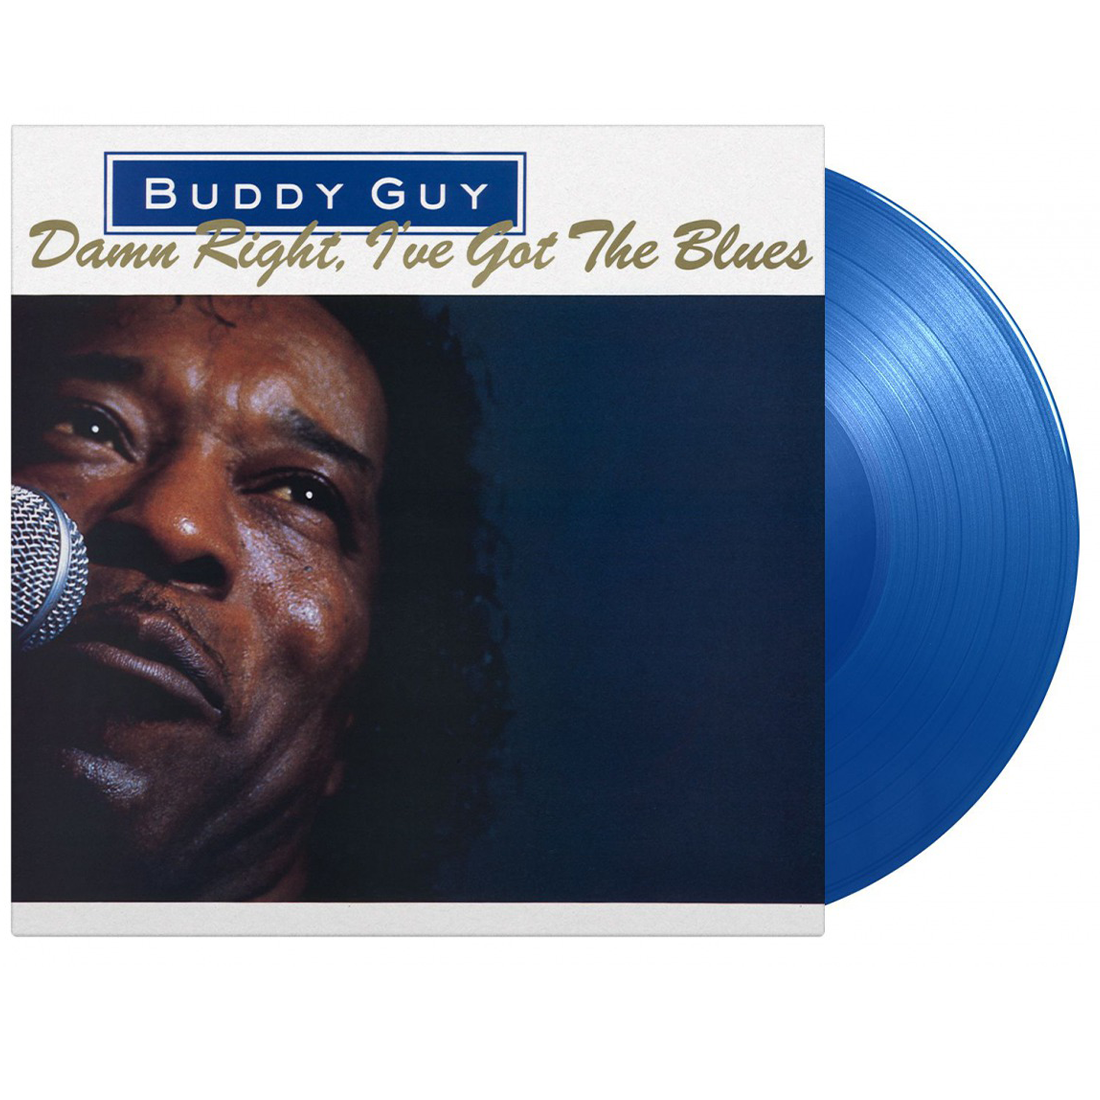 BUDDY GUY - DAMN RIGHT, I'VE GOT THE BLUES - LIMITED EDITION - TRANSLUCENT BLUE COLOR - VINYL LP